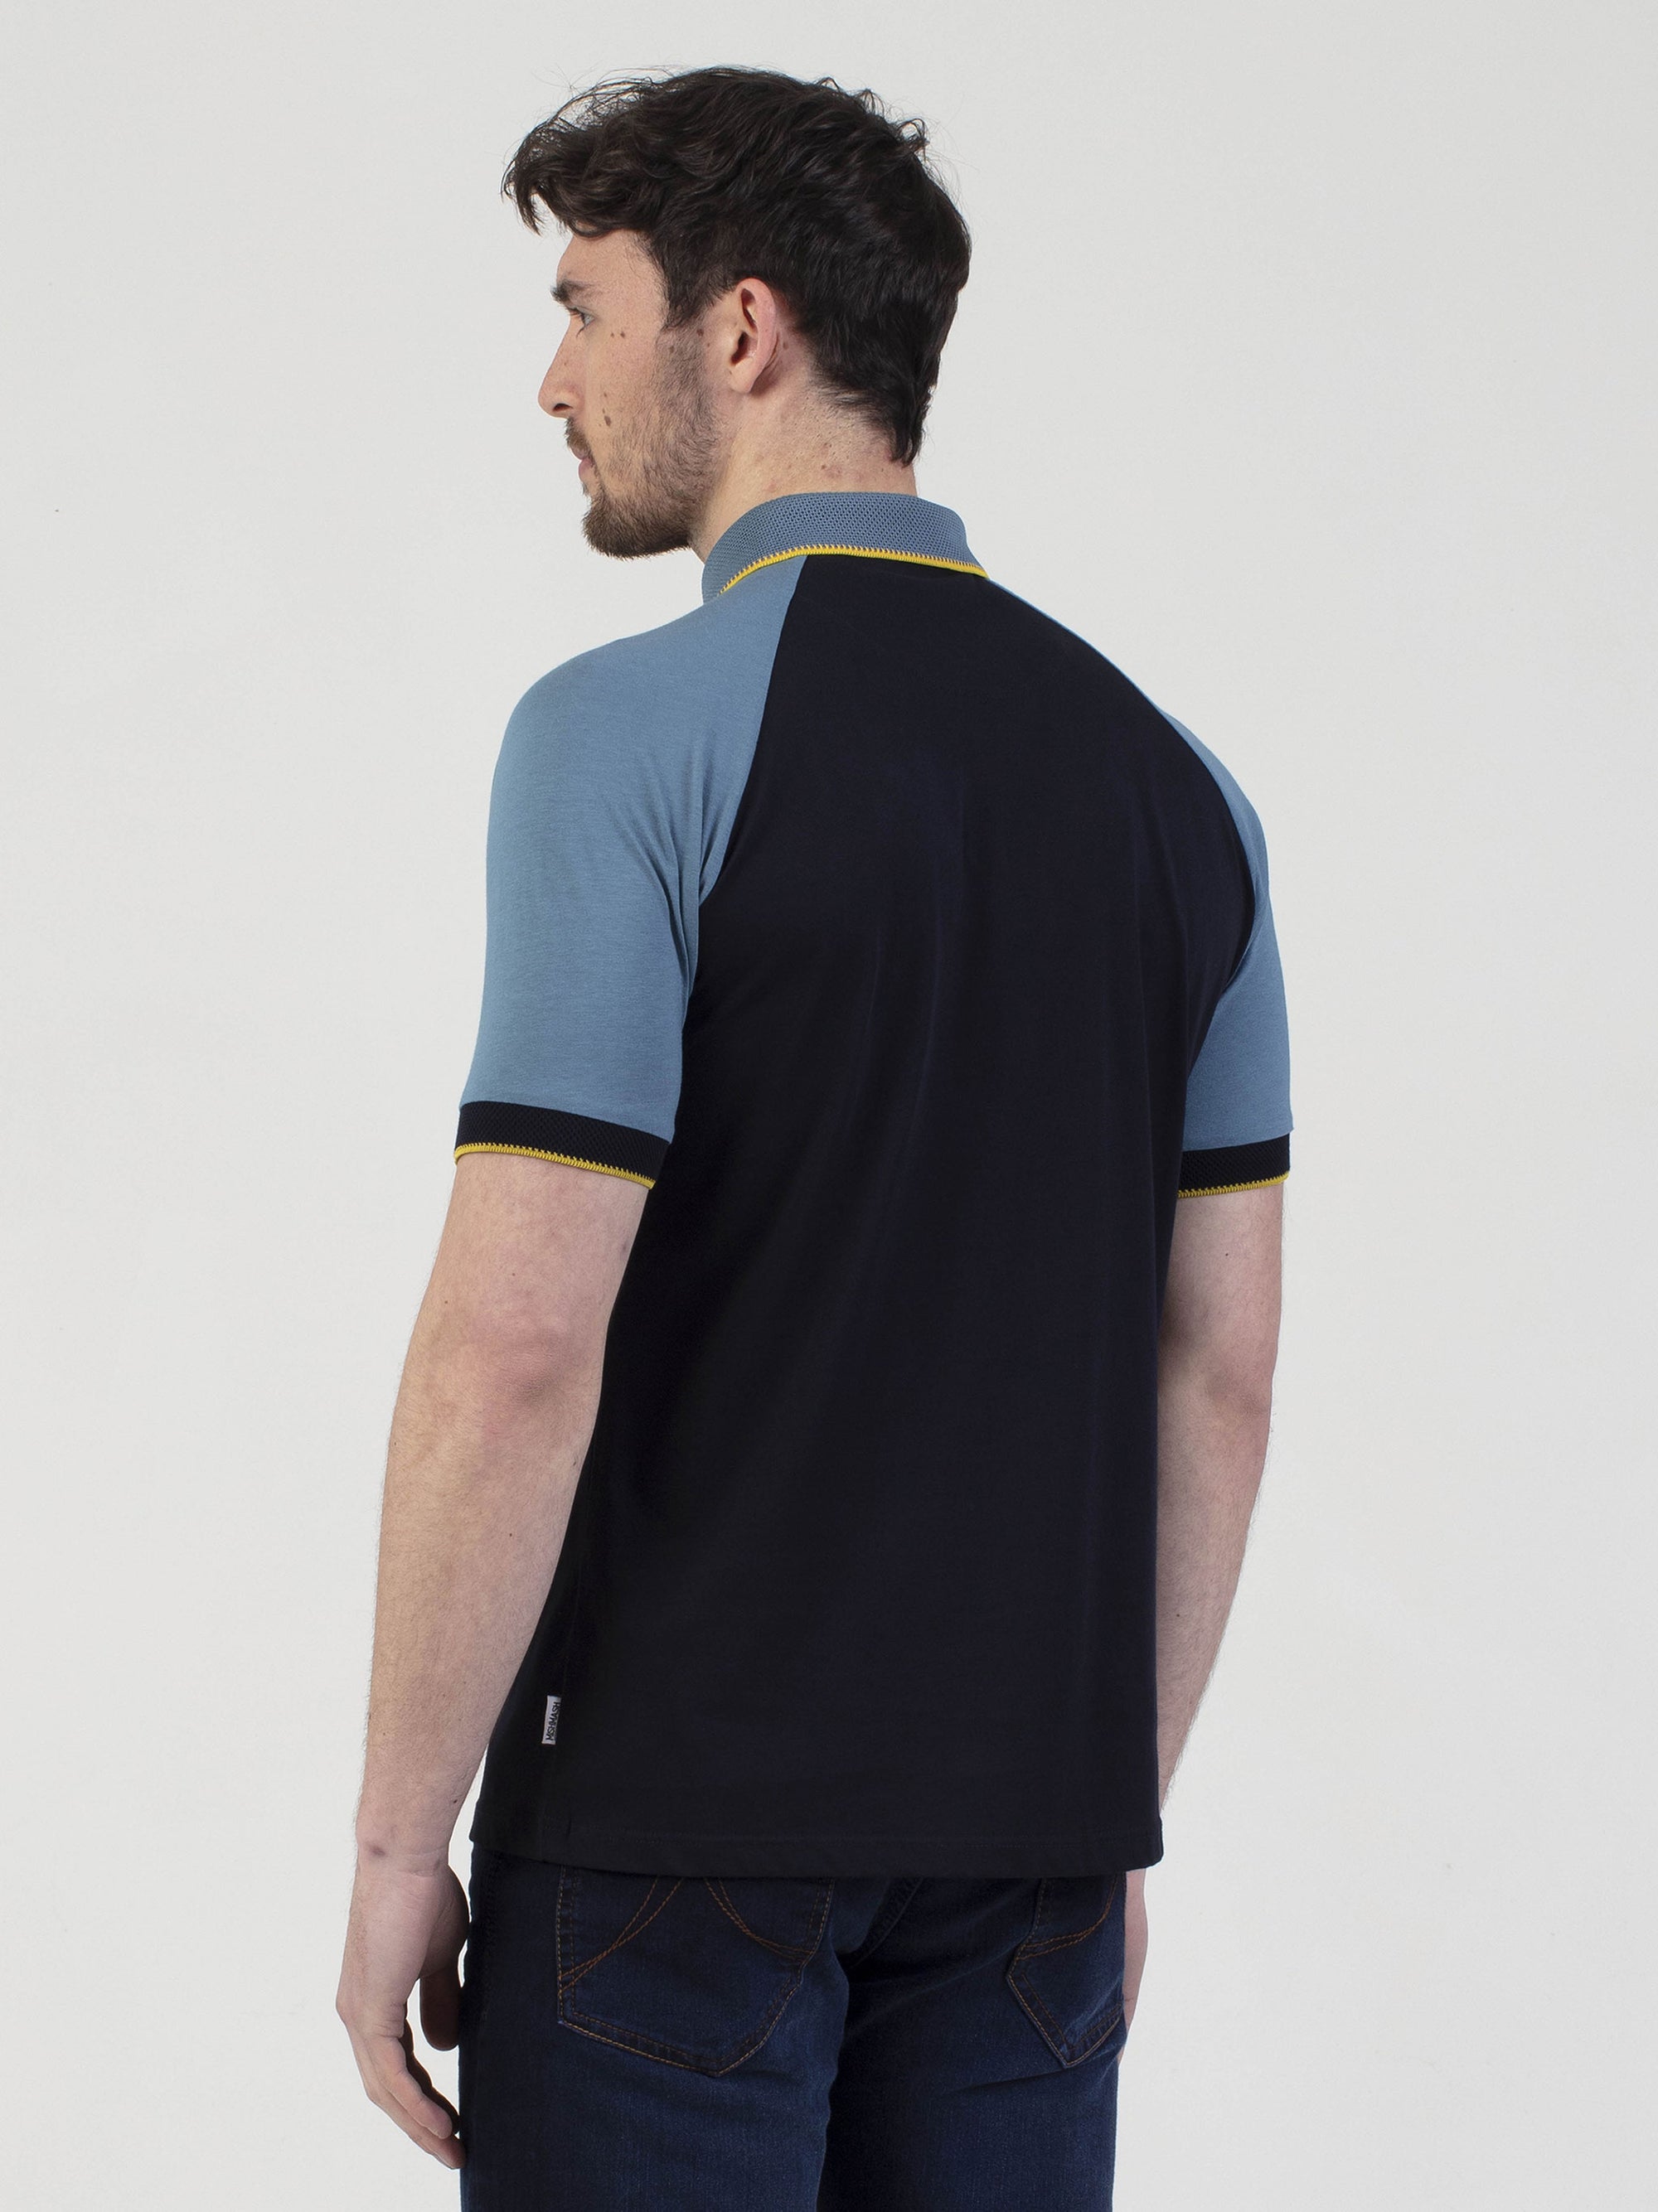 cannes-navy-blue-colour-block-jersey-mens-raglan-short-sleeve-polo-shirt-mish-mash